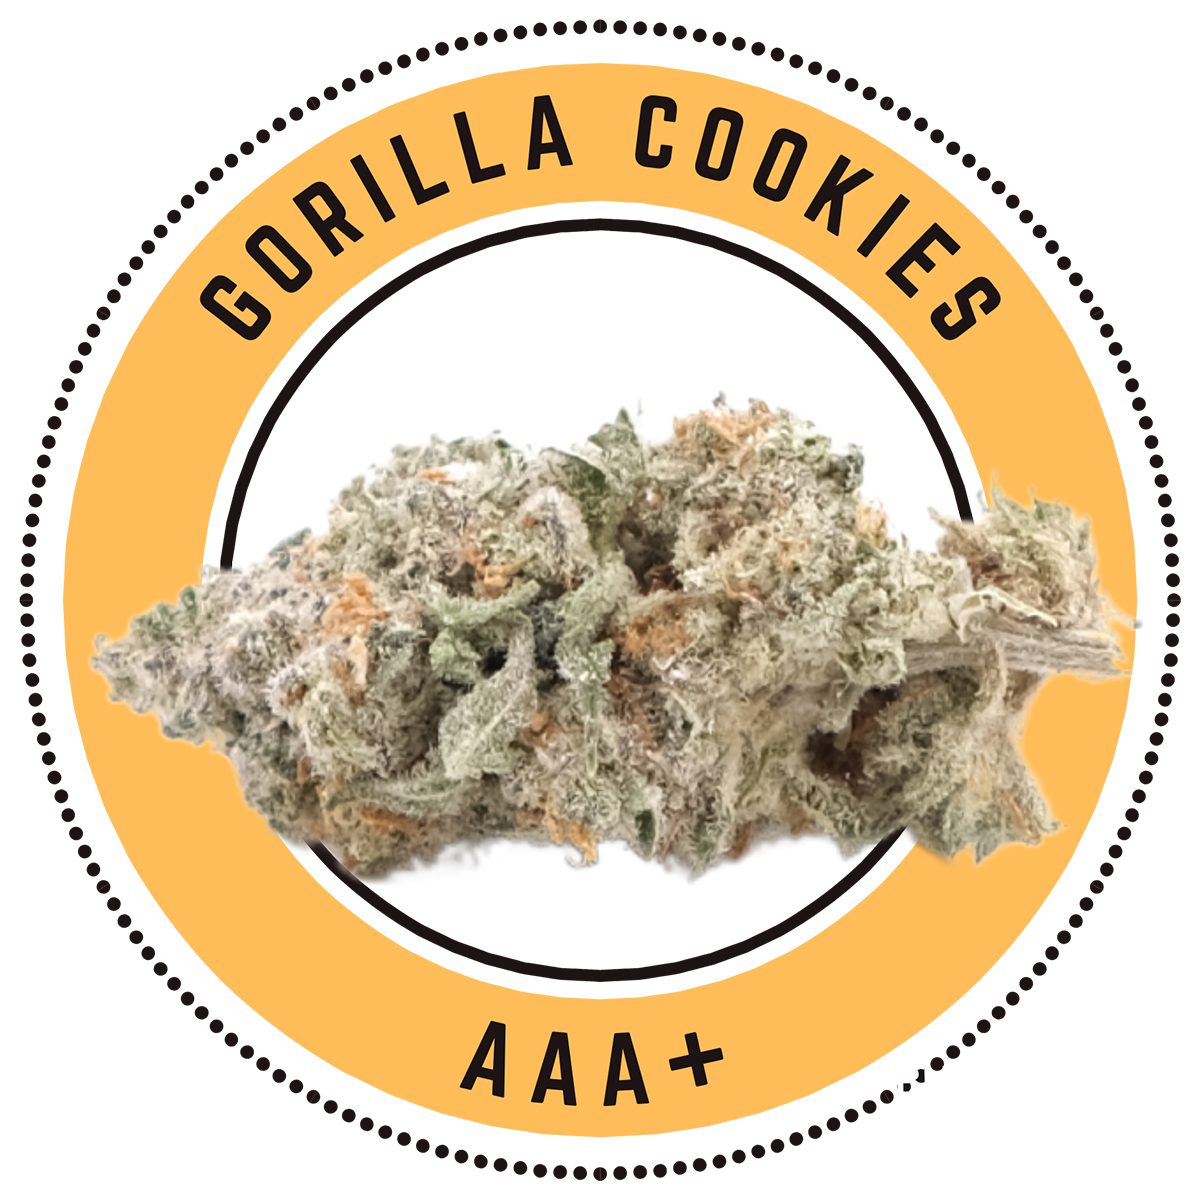 Gorilla Cookies AAA+ 2